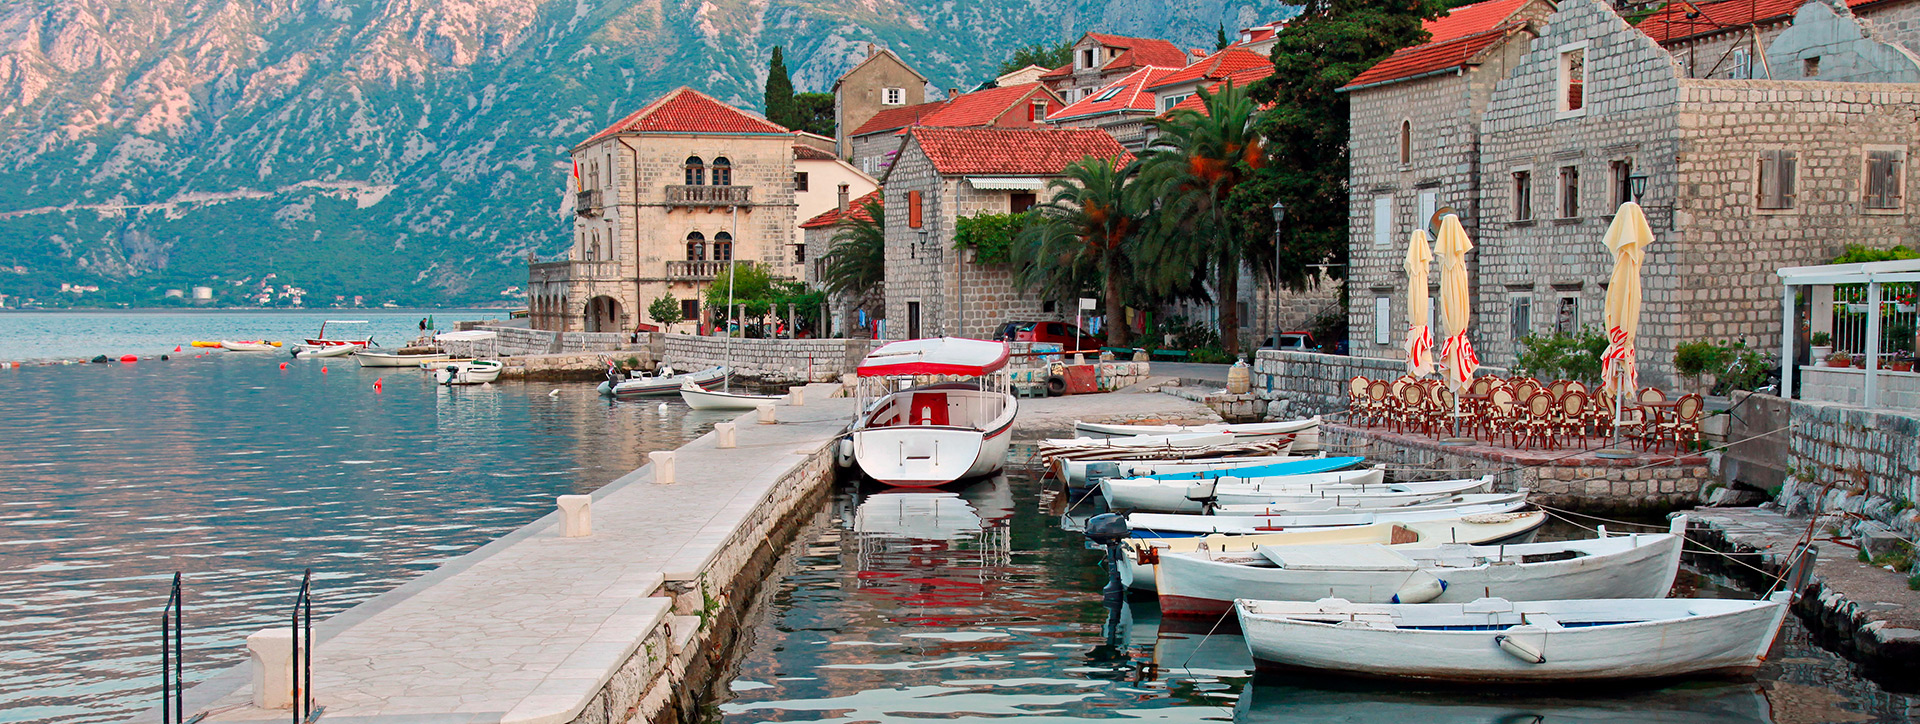 Boat parking, Perast, Montenegro - SimpleSail sailing routes